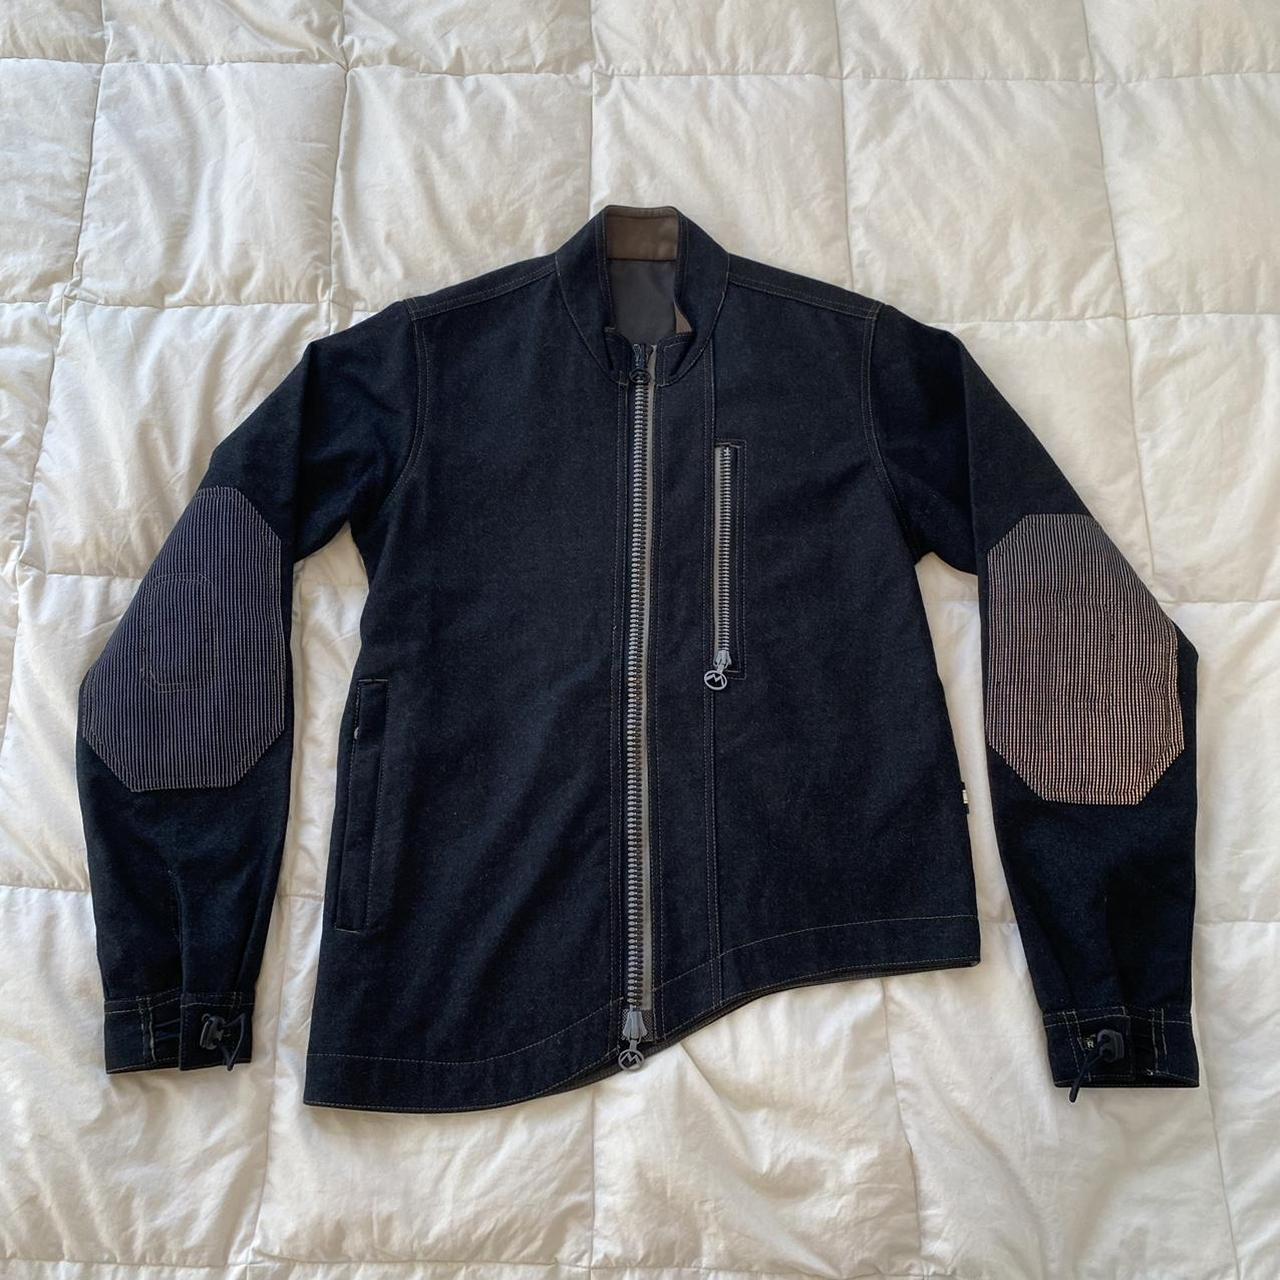 Product Image 1 - Maharishi asymmetrical biker jacket (wool).